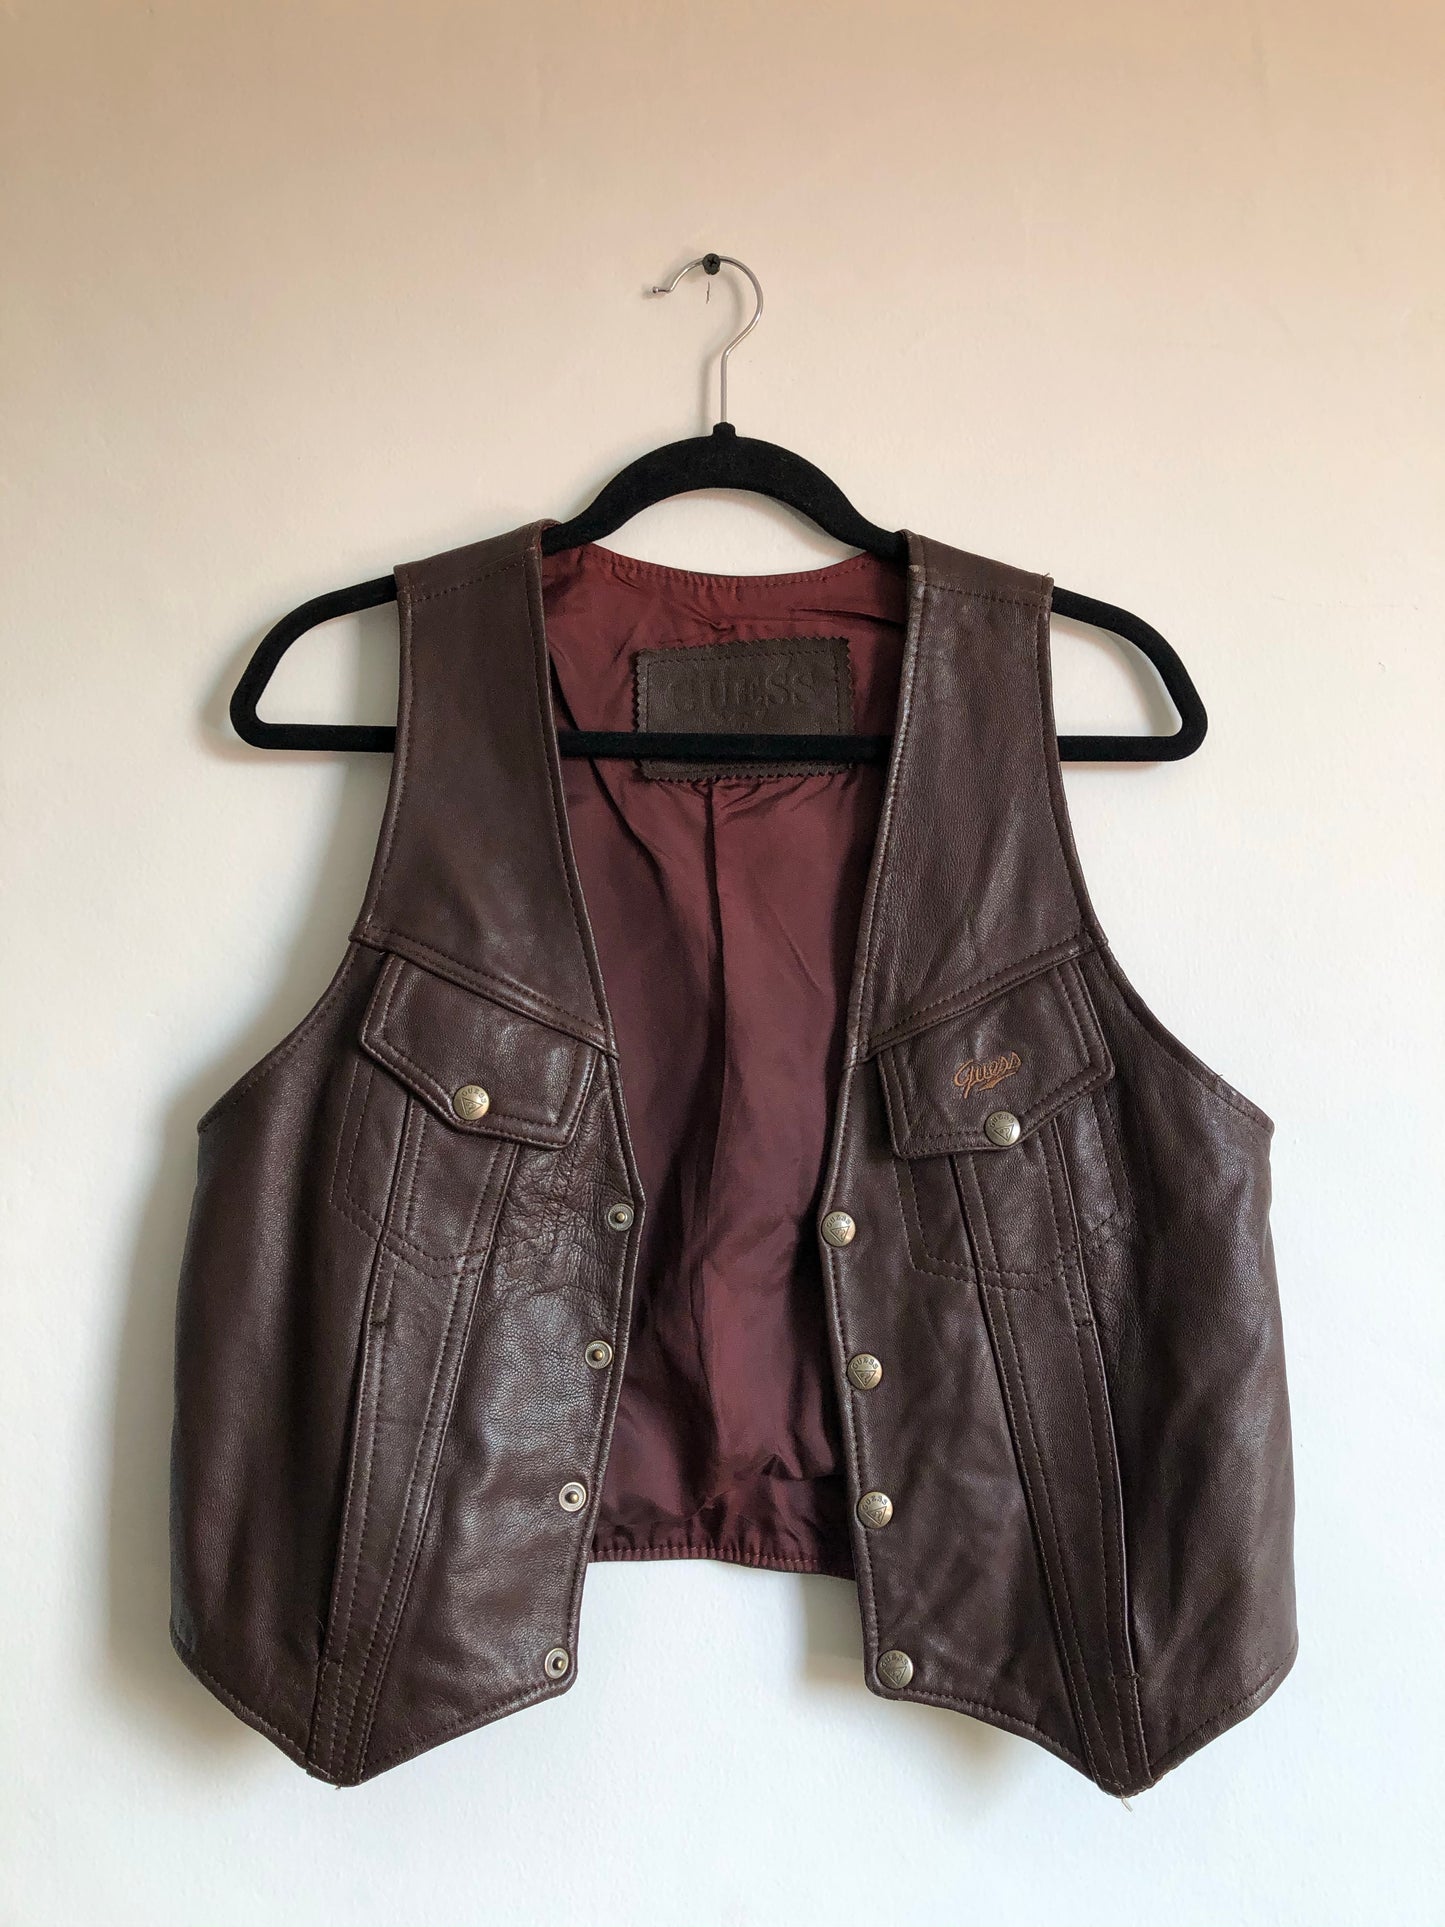 Guess Vintage Leather Vest